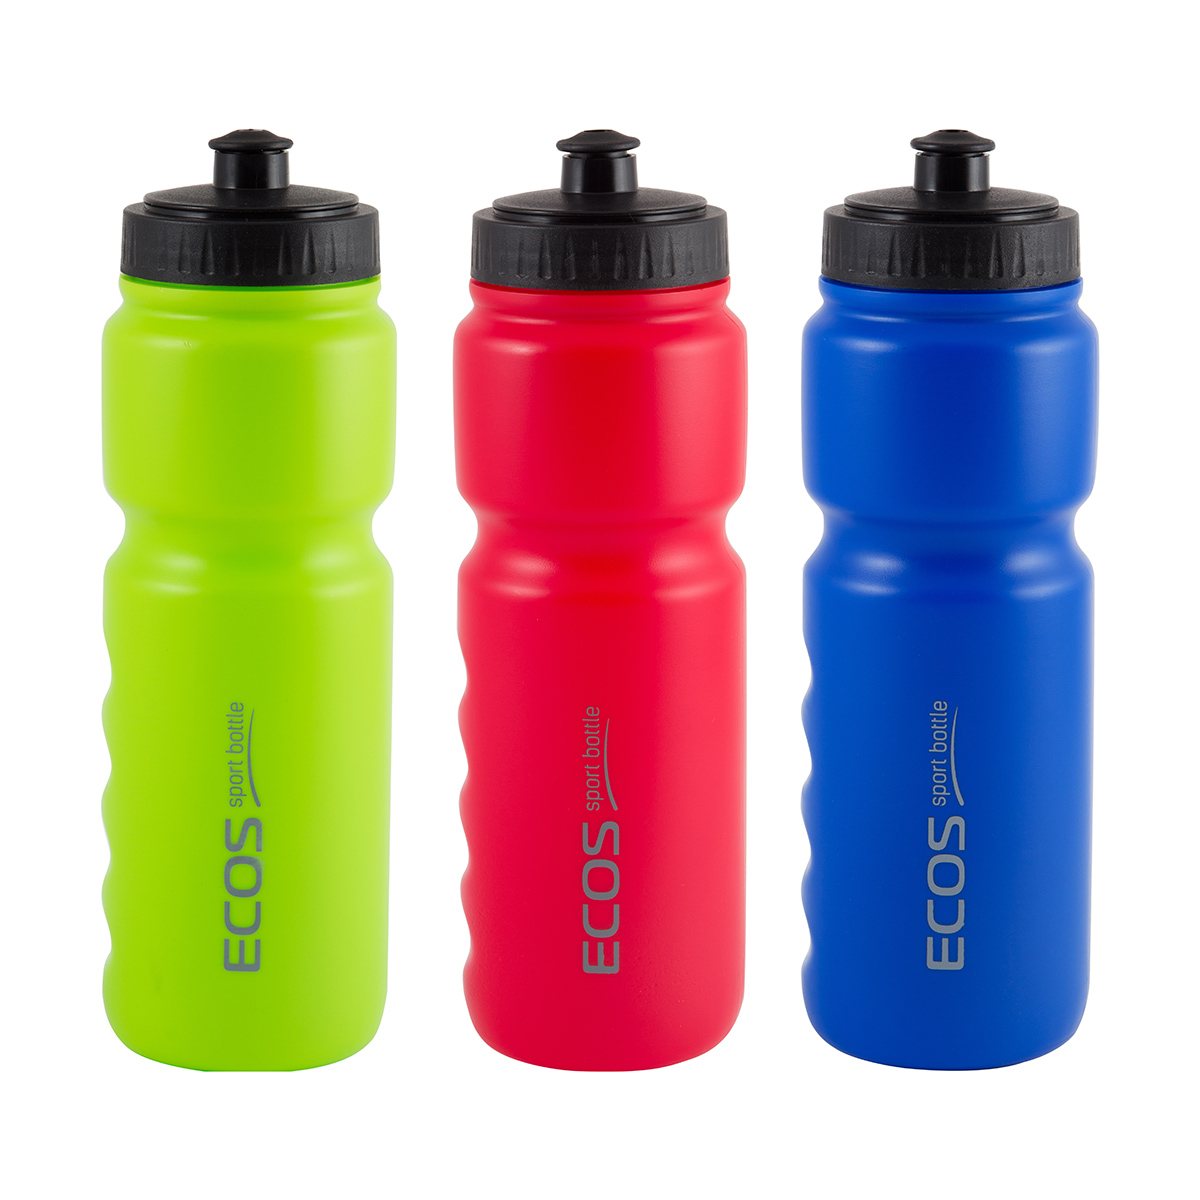 Бутылка для воды материал. Велосипедная бутылка для воды Ecos HG-2015, 800мл. Бутылка для воды велосипедная 850мл Ecos. Спортивная бутылка, sportbottle HG-2015 спортивная (велосипедная) 800мл Ecos, 800л. UFC Exxe спортивная бутылка.